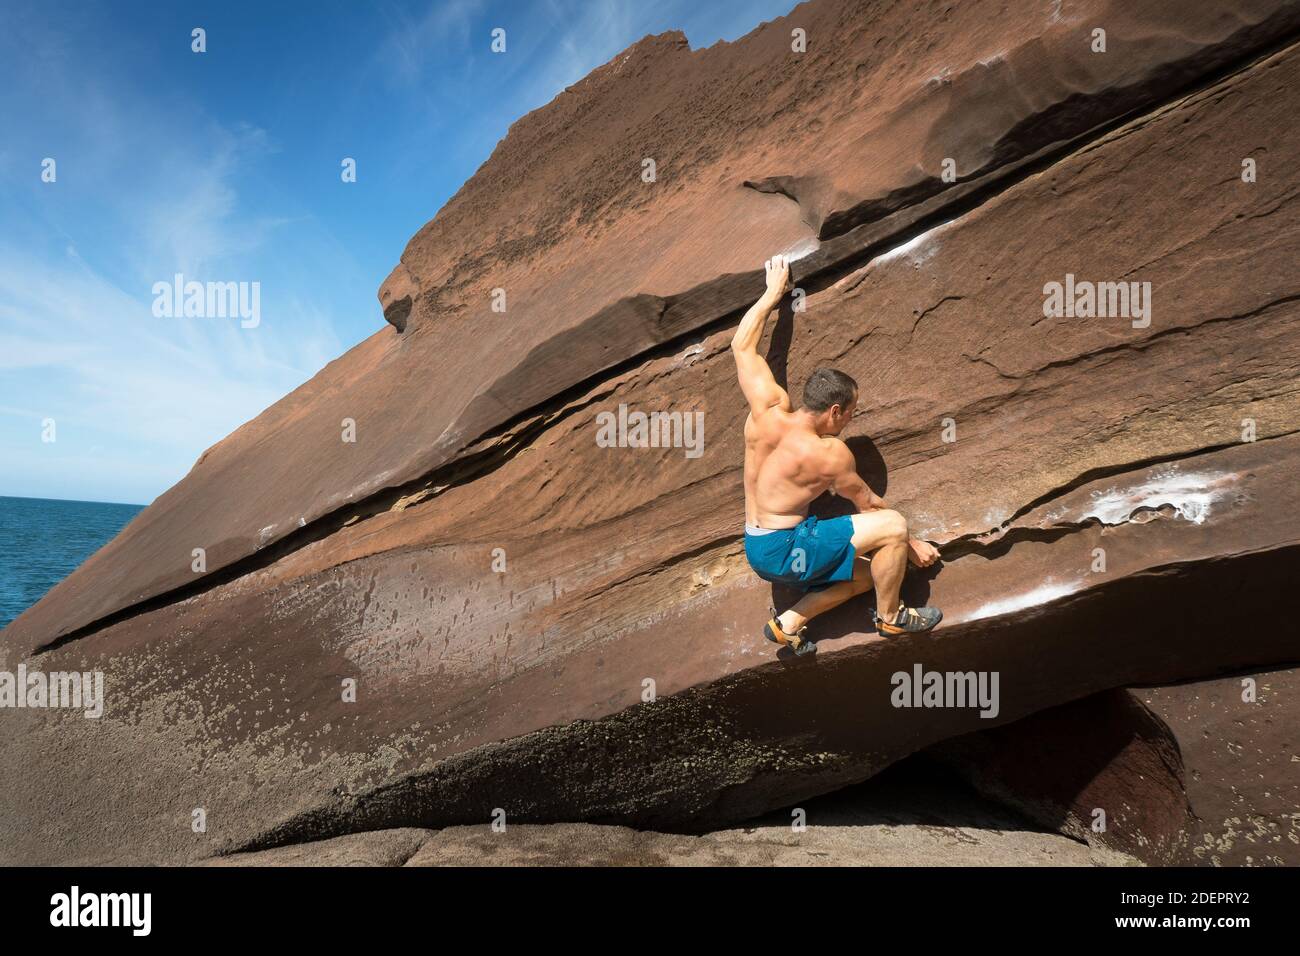 Man Climbing Hard Boulder Problem on a Sunny Day at St Bees, Cumbria, UK Stock Photo